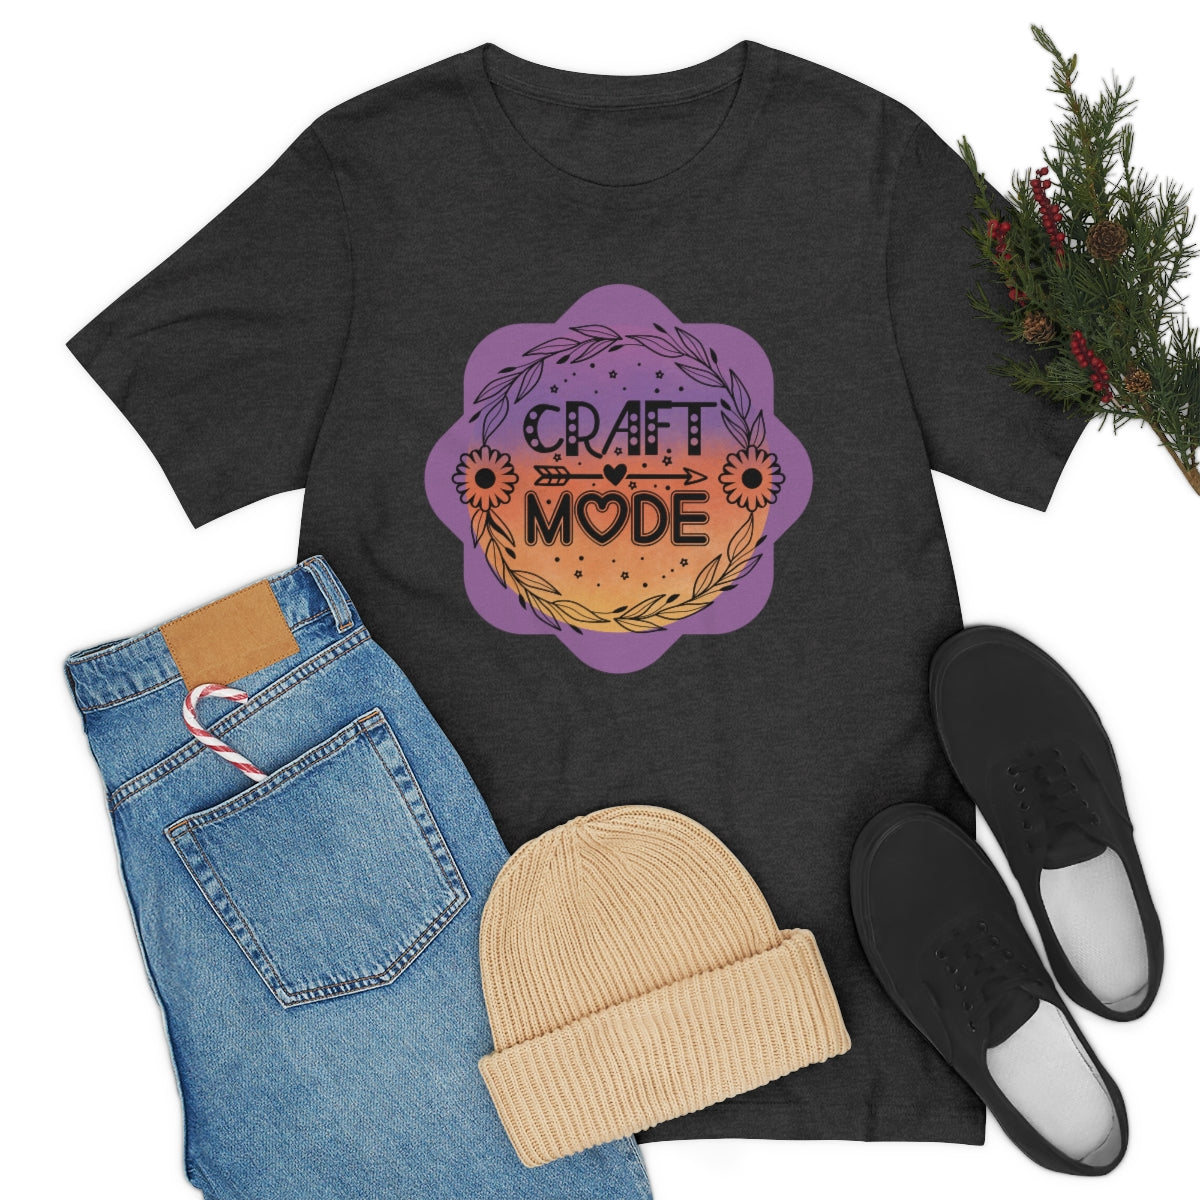 Craft Mode Purple Doodle Flower Unisex Jersey Short Sleeve Tee S-3XL